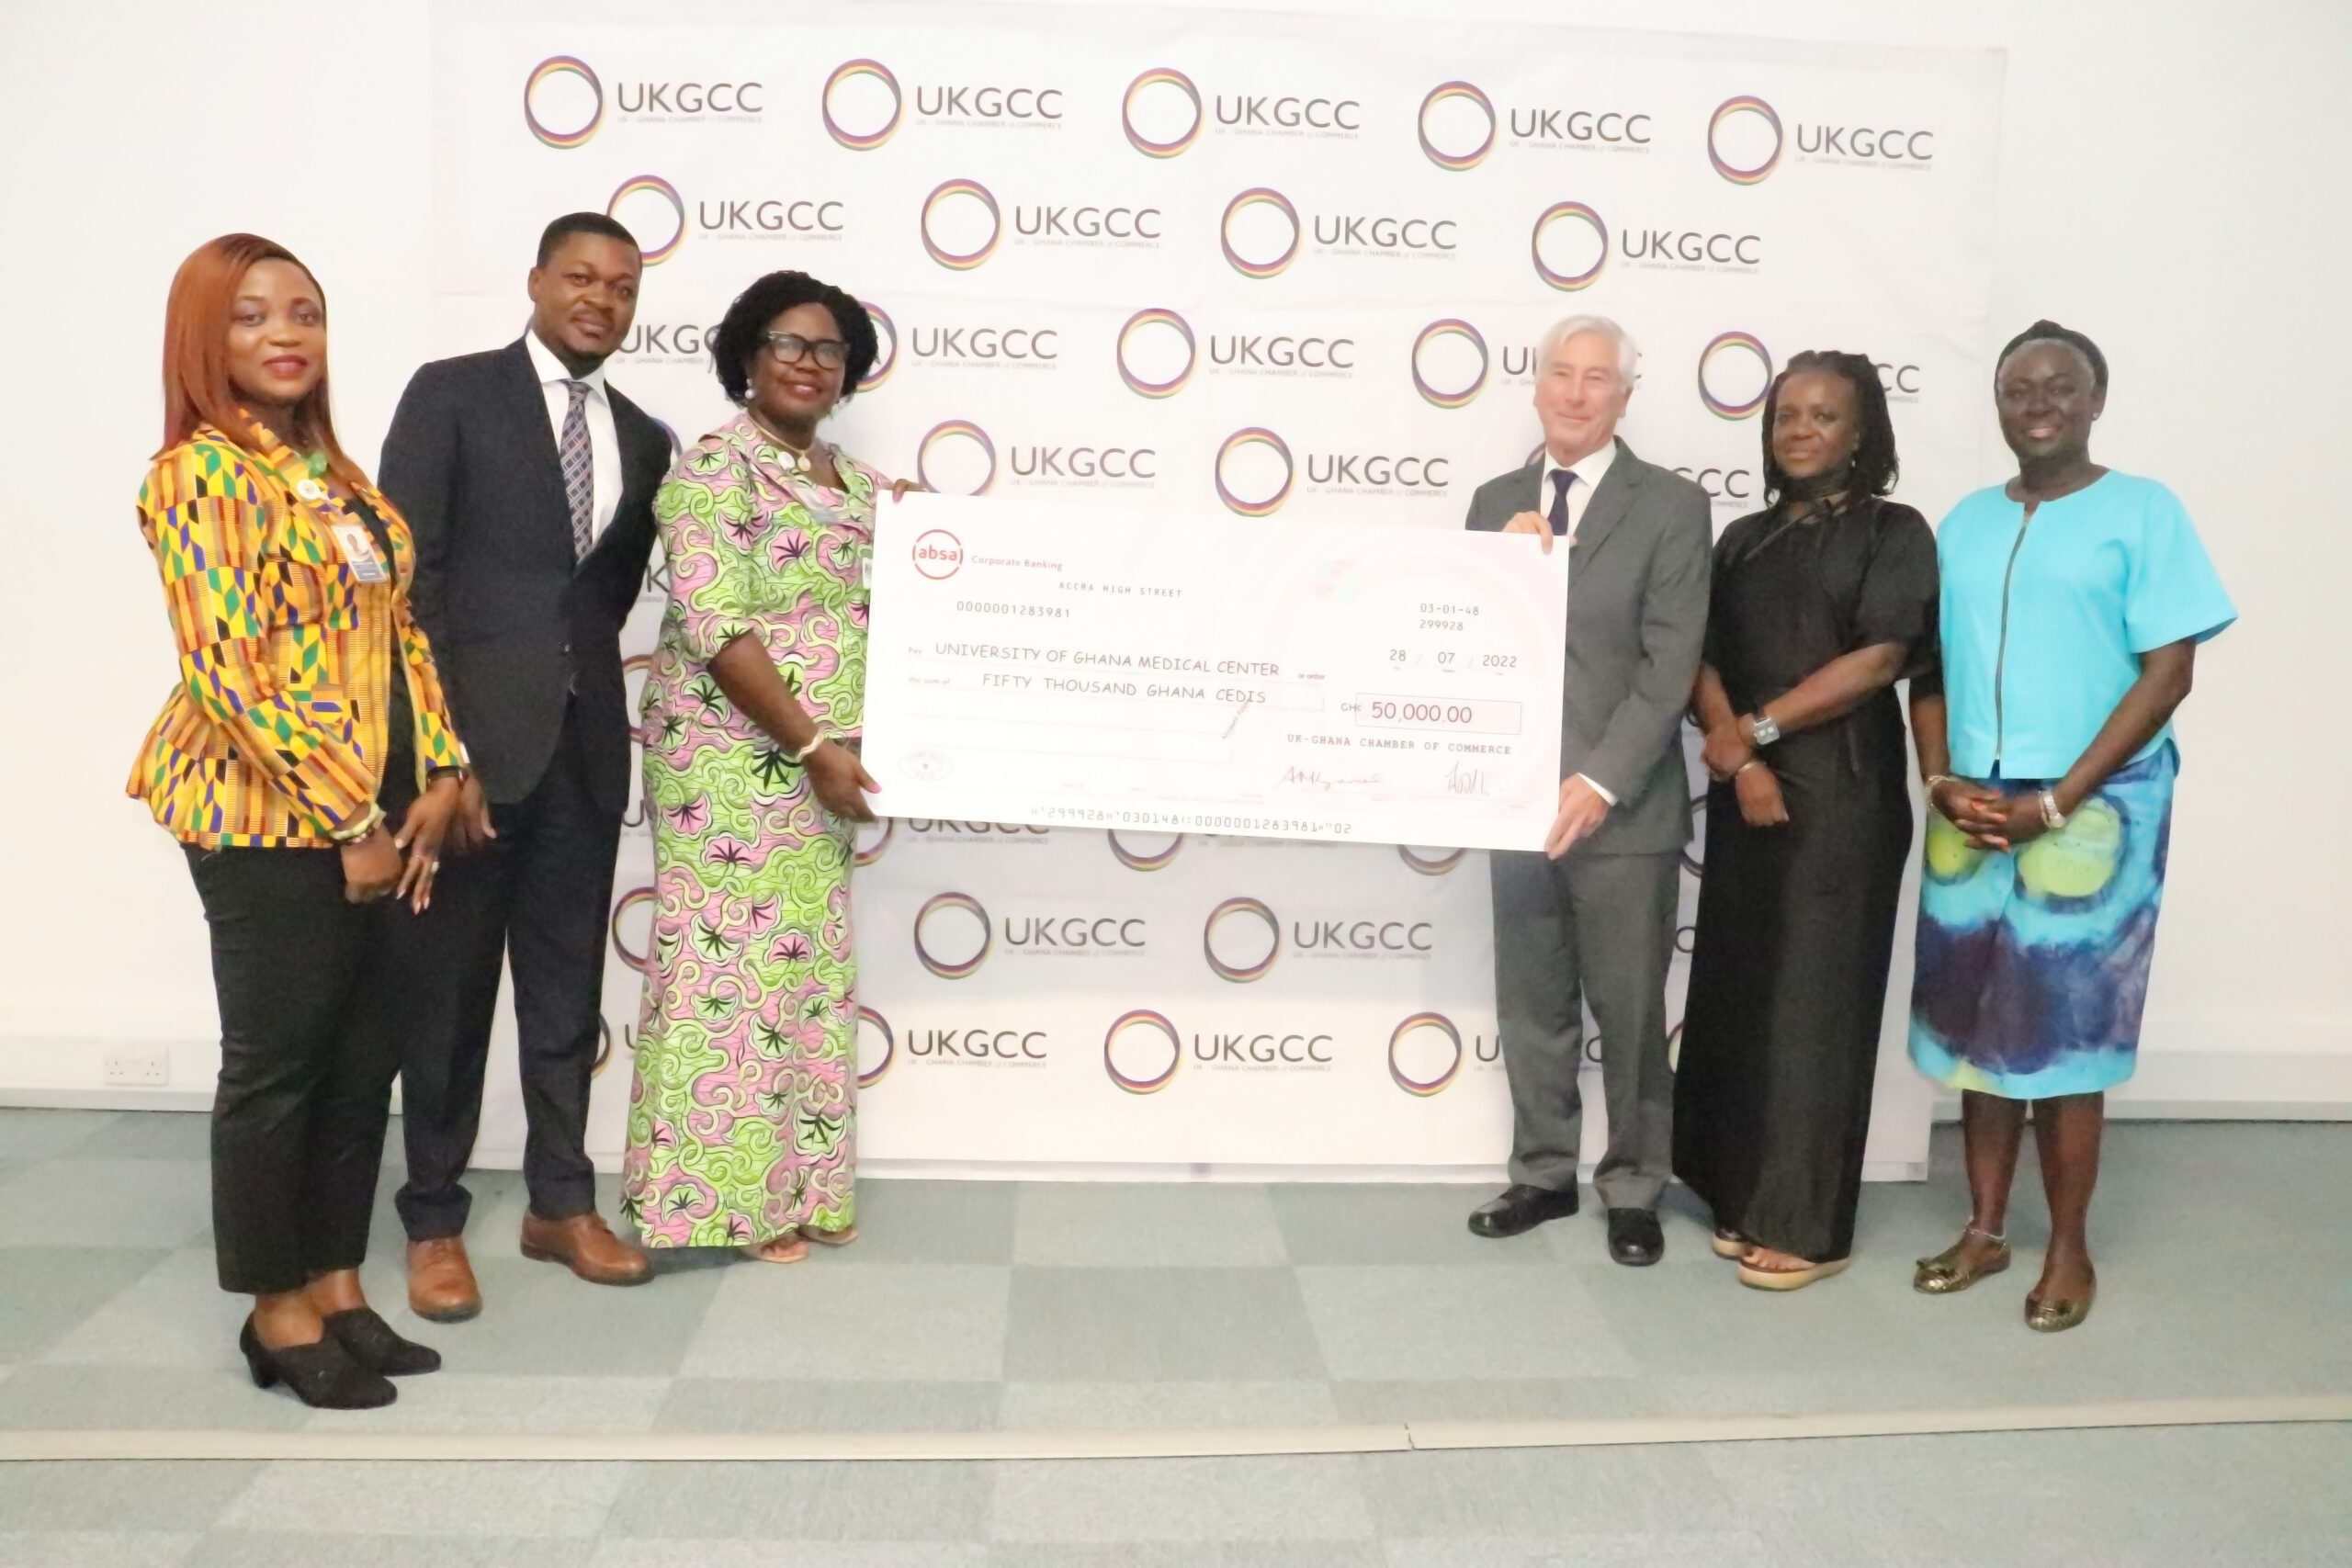 UKGCC donates to the University of Ghana Medical Centre